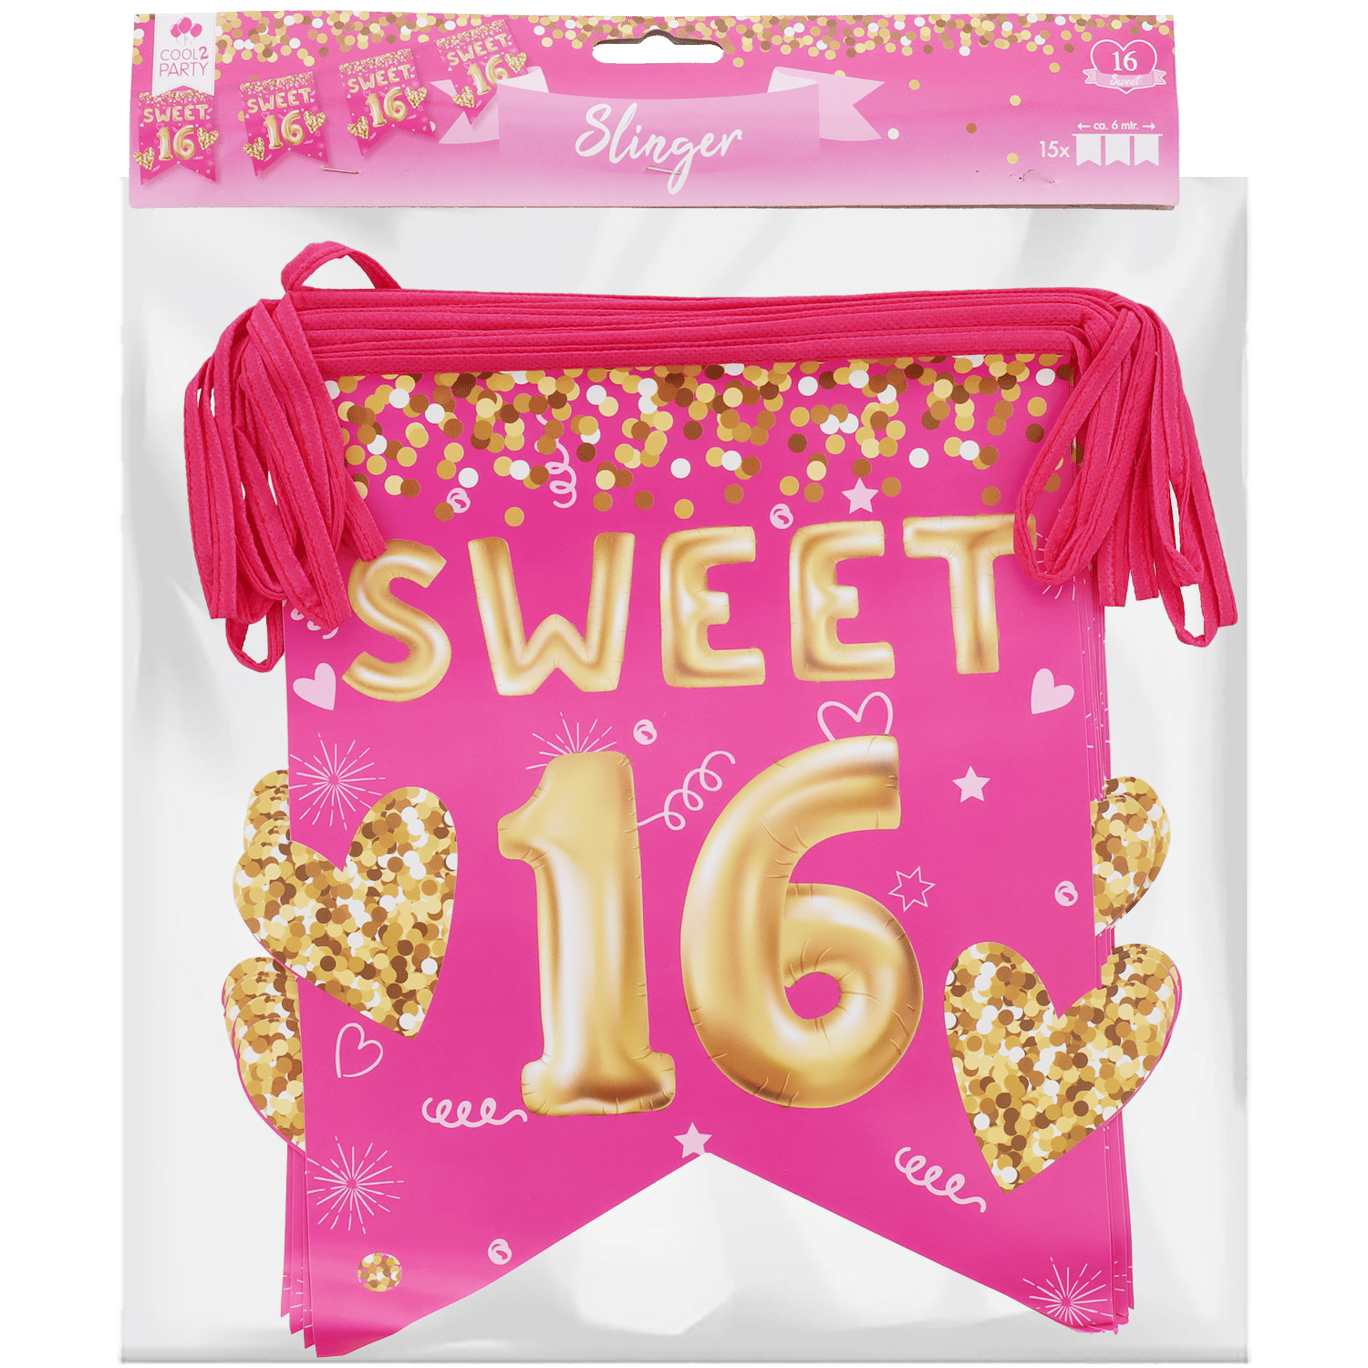 Sweet sixteen | Action.com